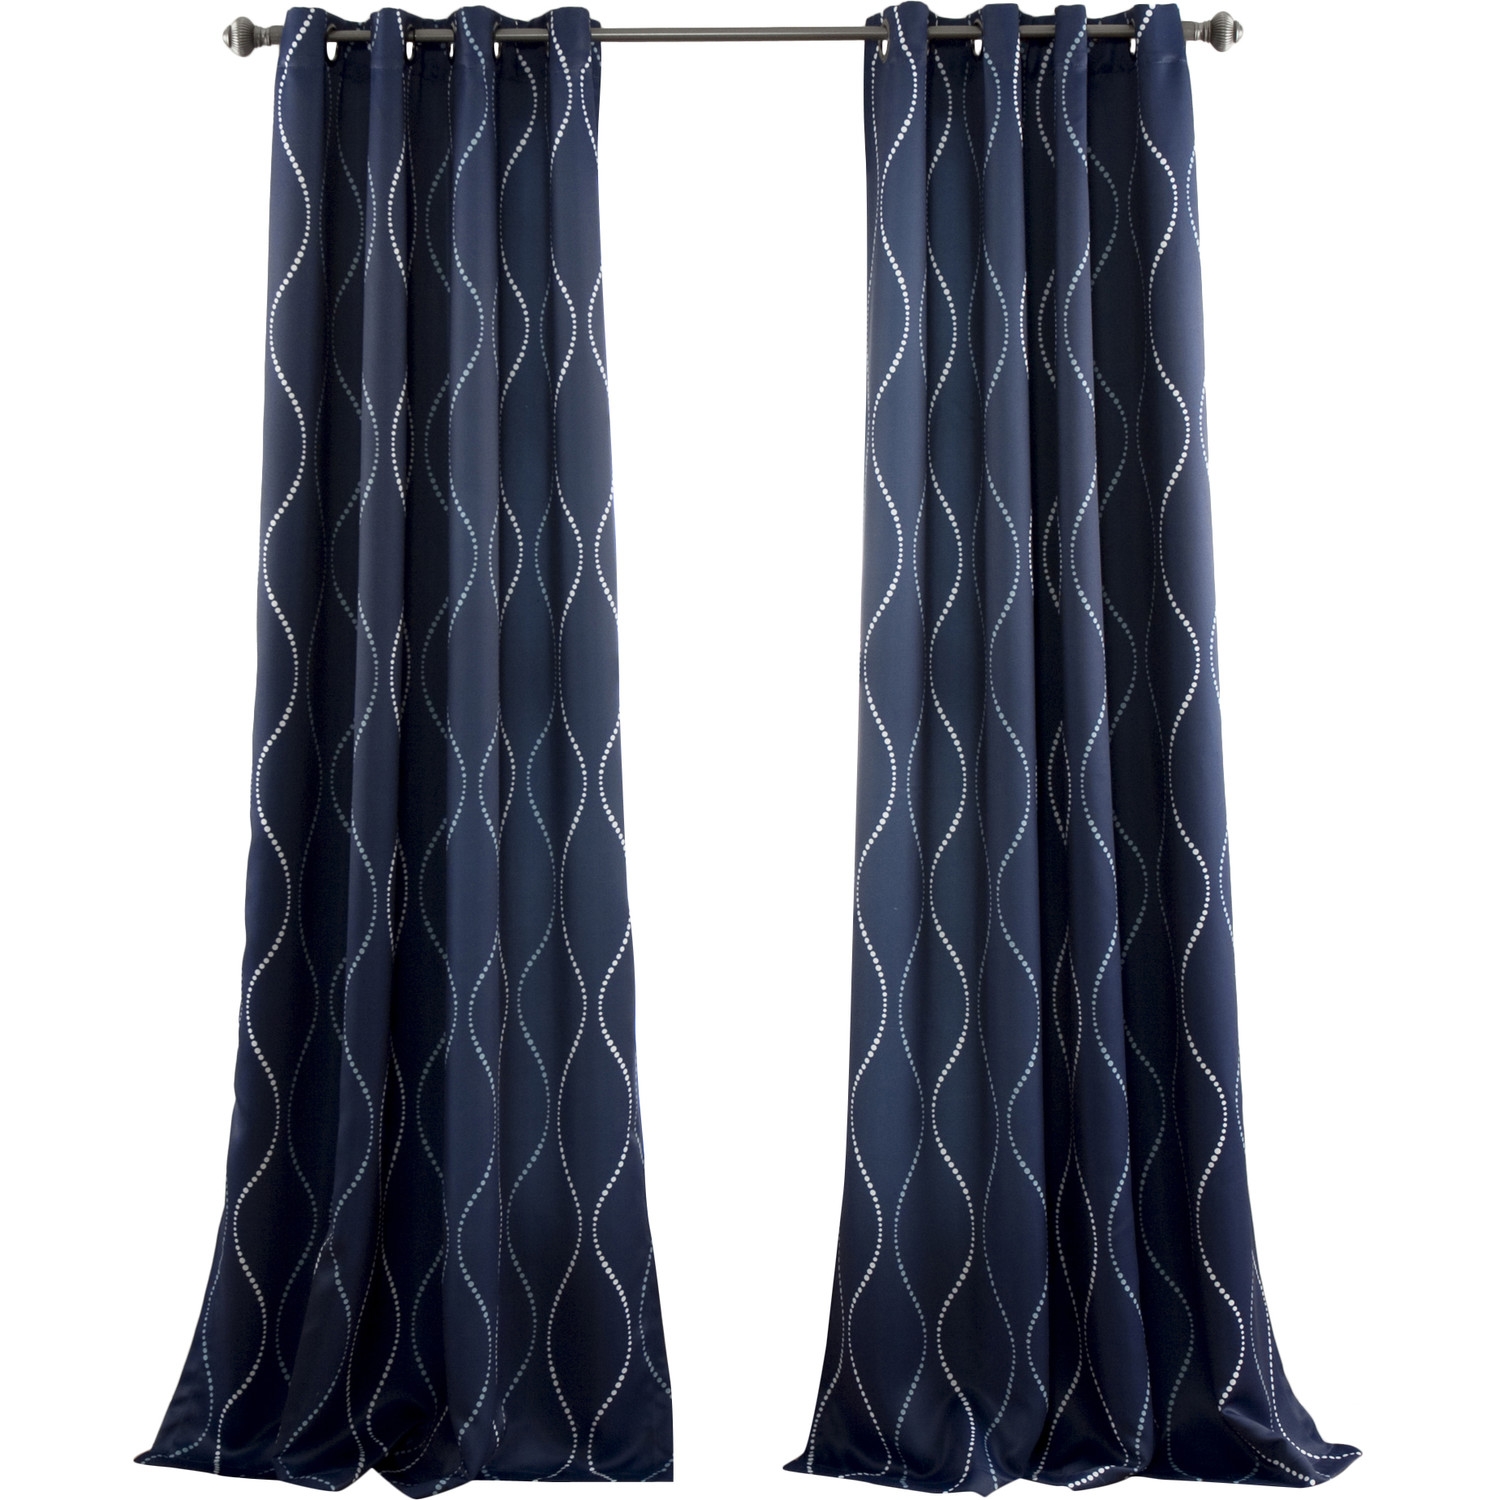 Swirl Curtain Panel (Set of 2) - Image 0